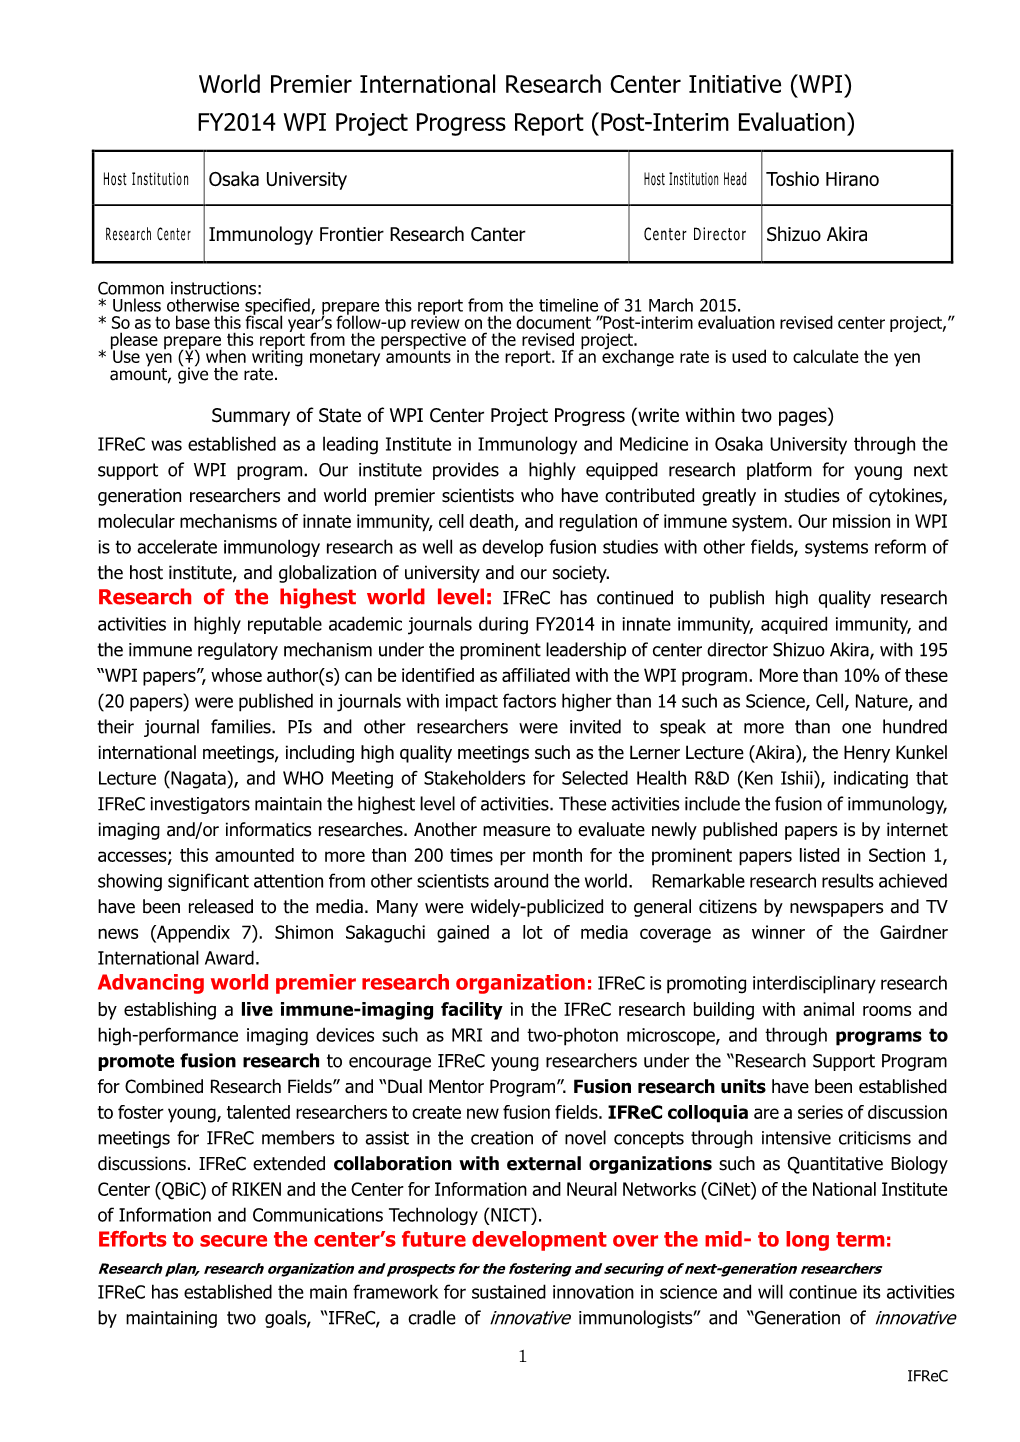 World Premier International Research Center Initiative (WPI) FY2014 WPI Project Progress Report (Post-Interim Evaluation)